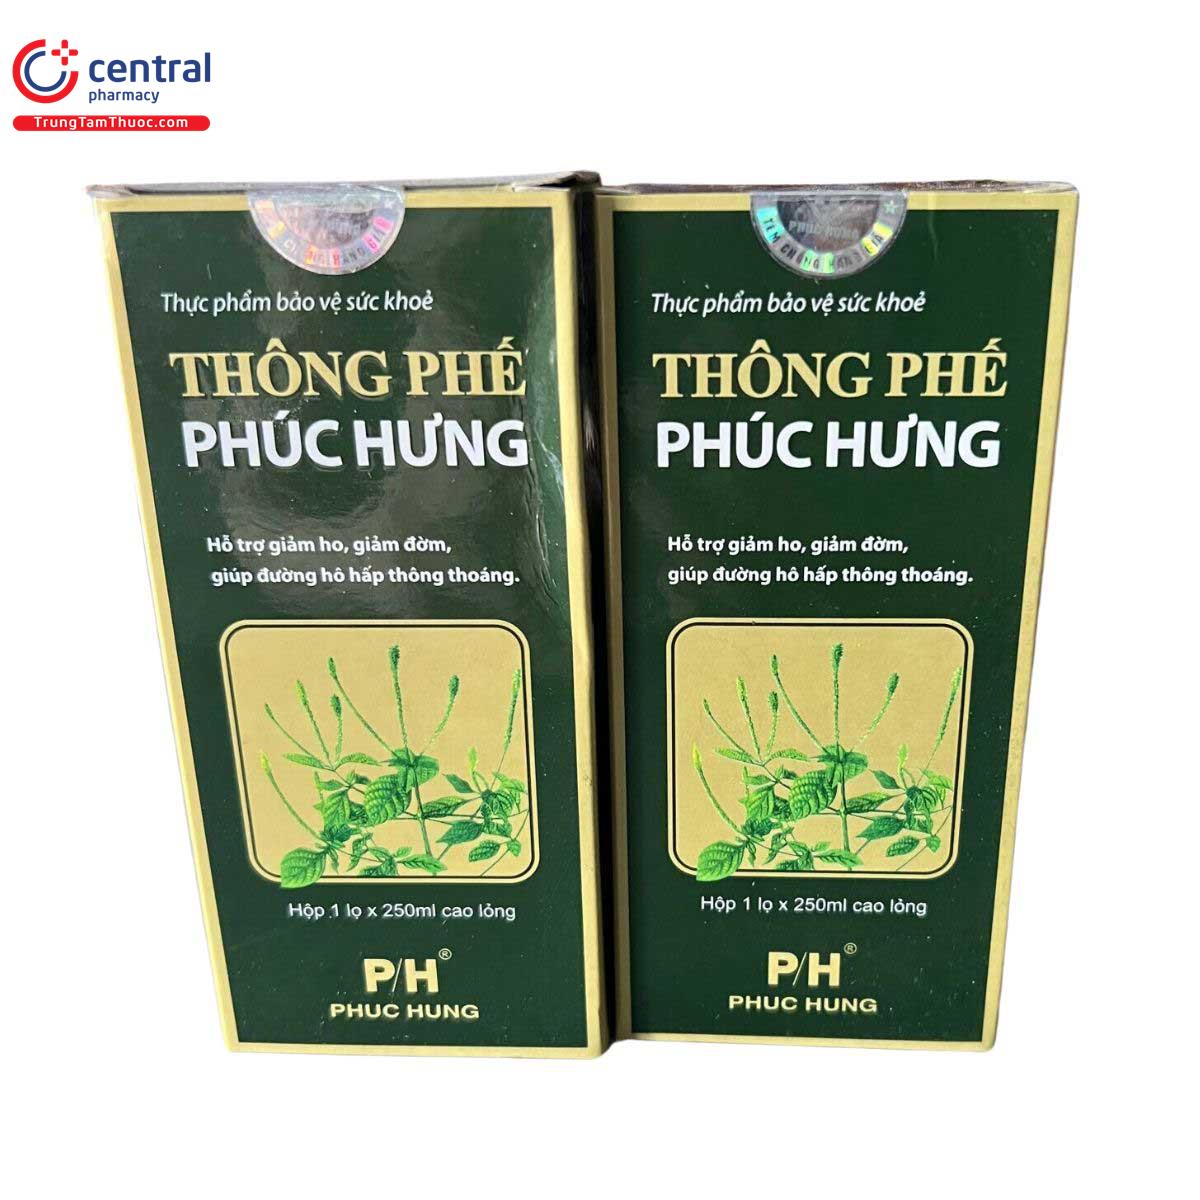 thong phe phuc hung 7 I3566